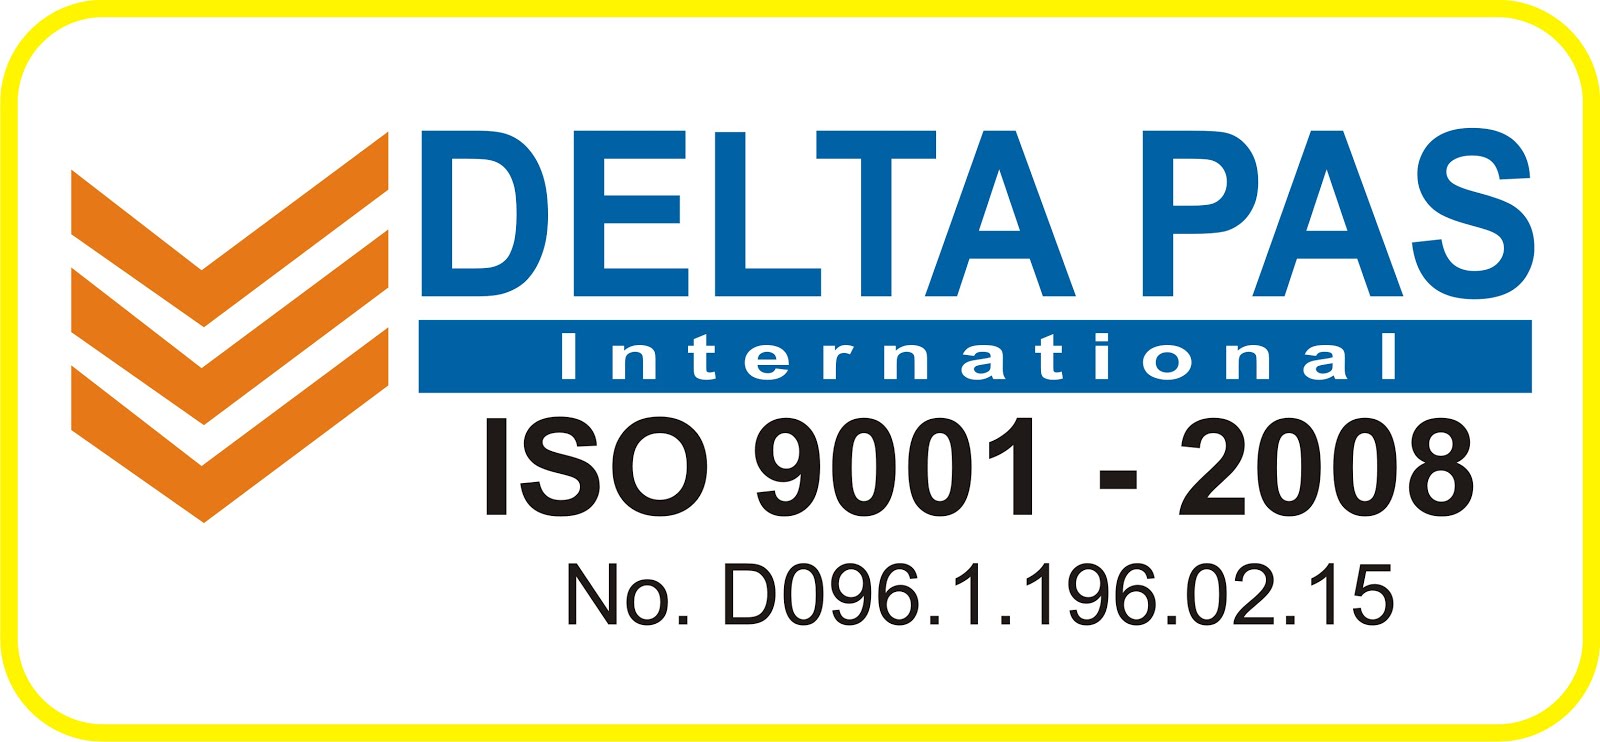 DELTAPAS International ISO 9001:2008